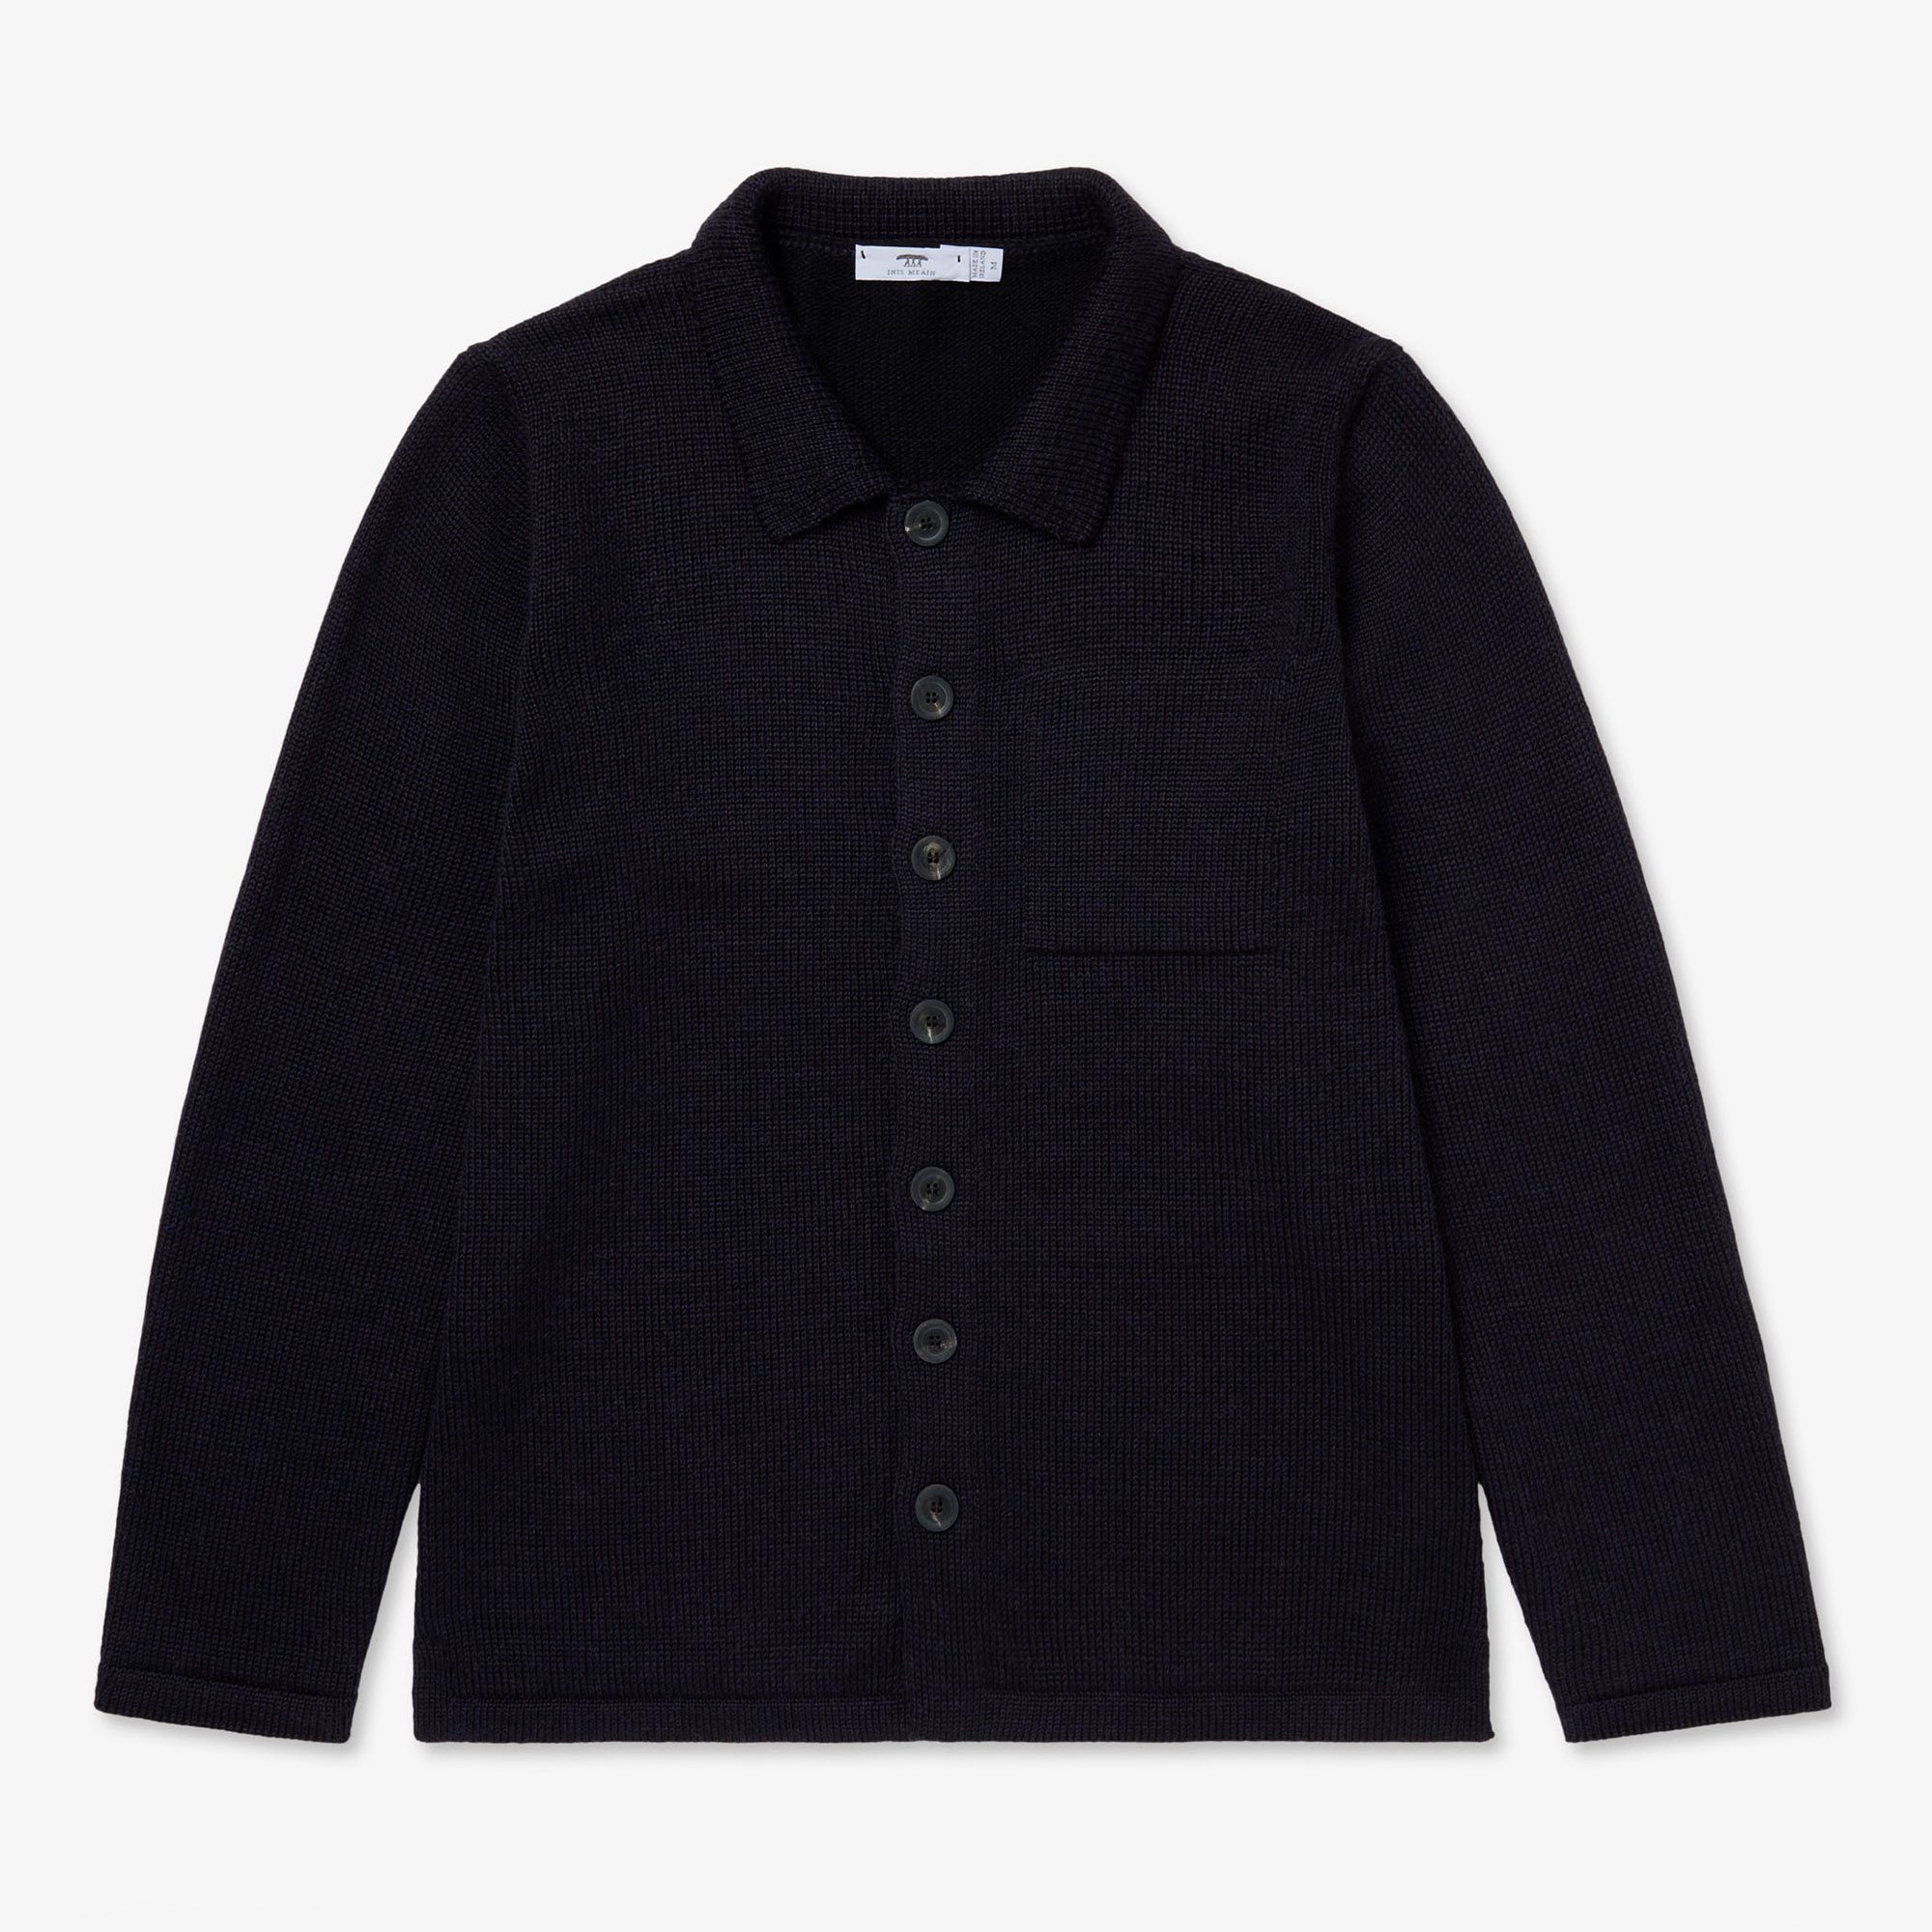 Winter Shirt Jacket - Black — Inis Meáin Knitwear